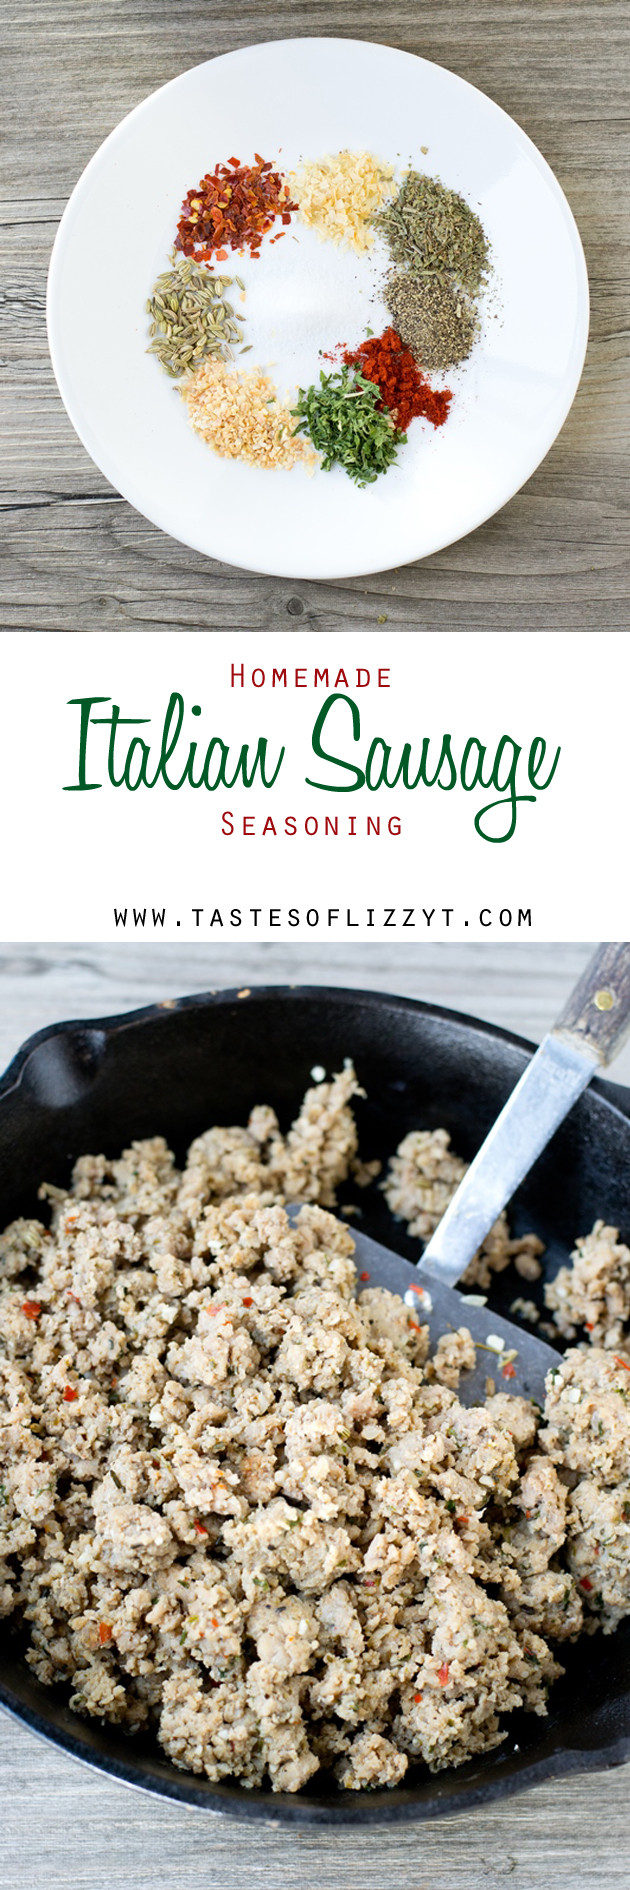 Homemade Italian Sausage Recipes
 Make your own Italian sausage at home with this homemade